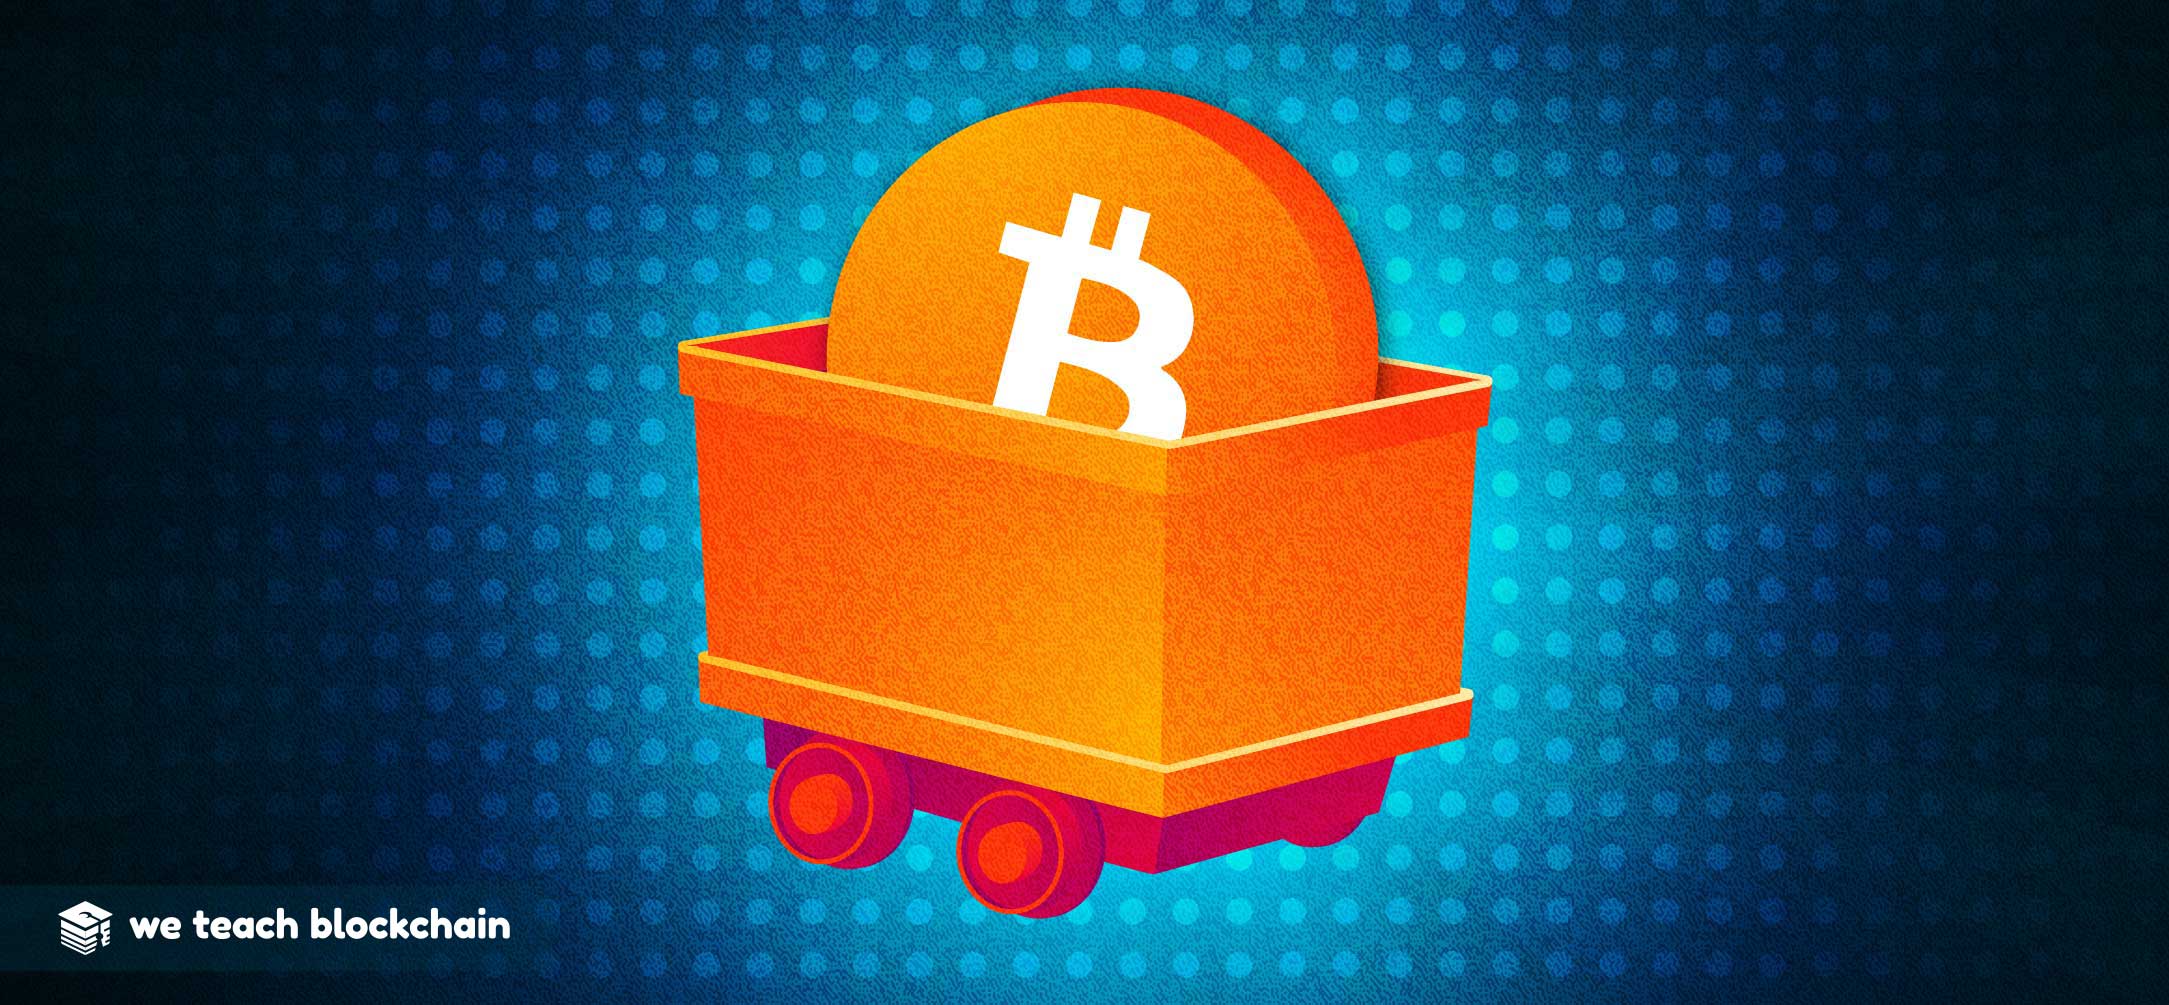 A bitcoin in a minecart